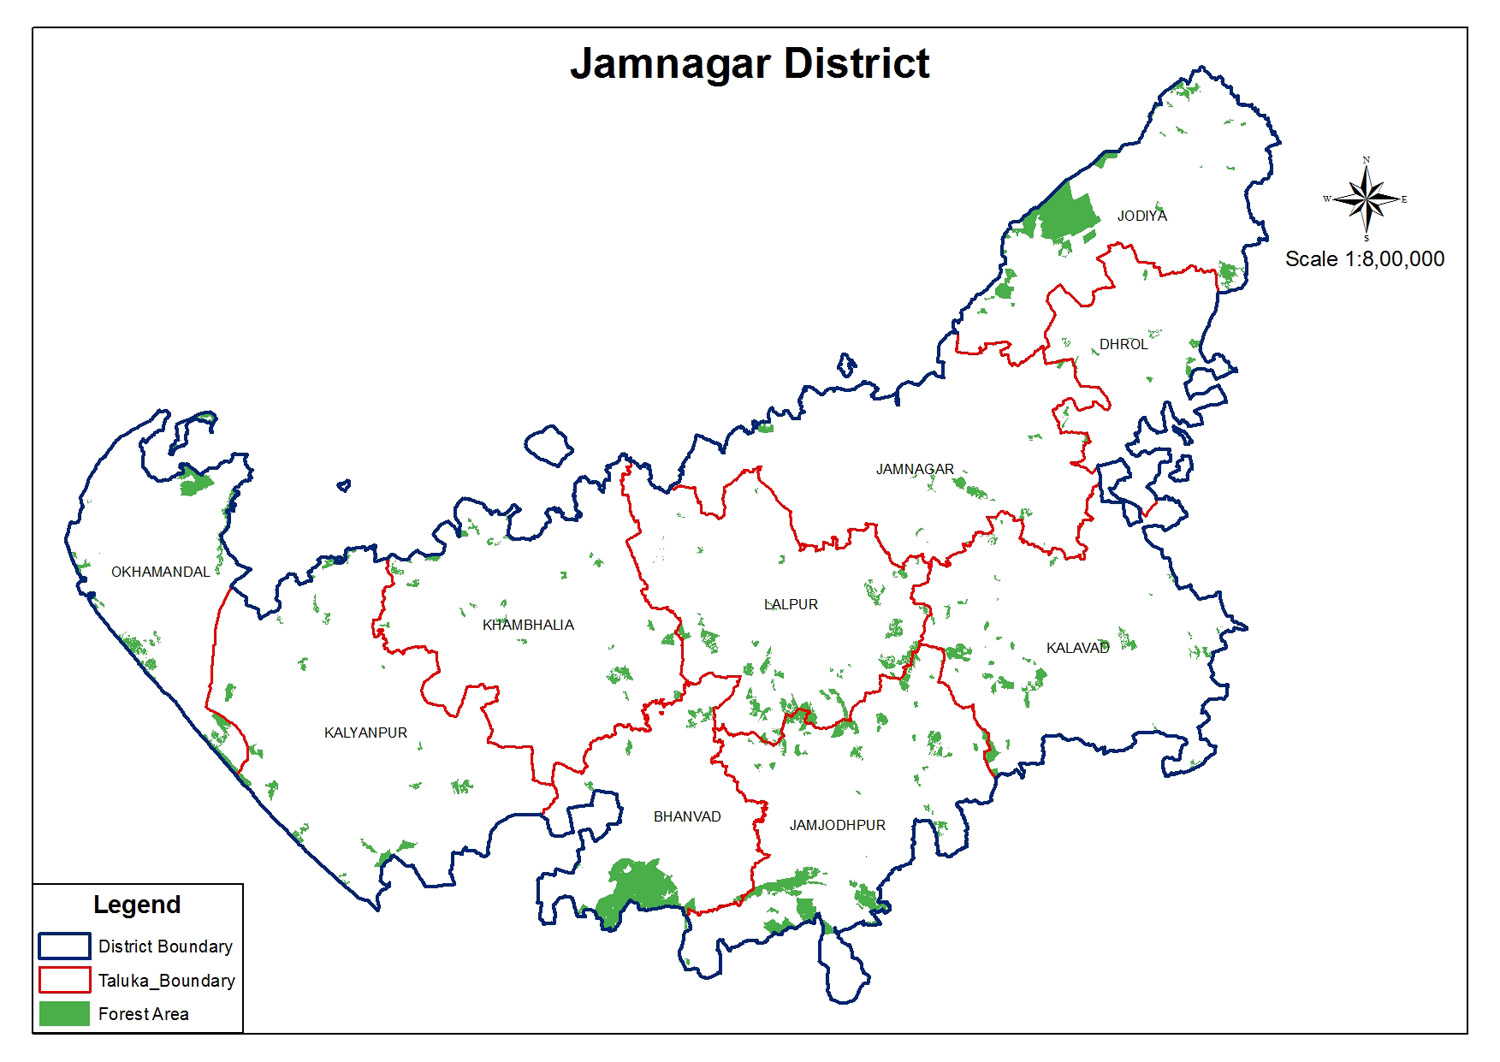 Geographical area & population of jamnagar